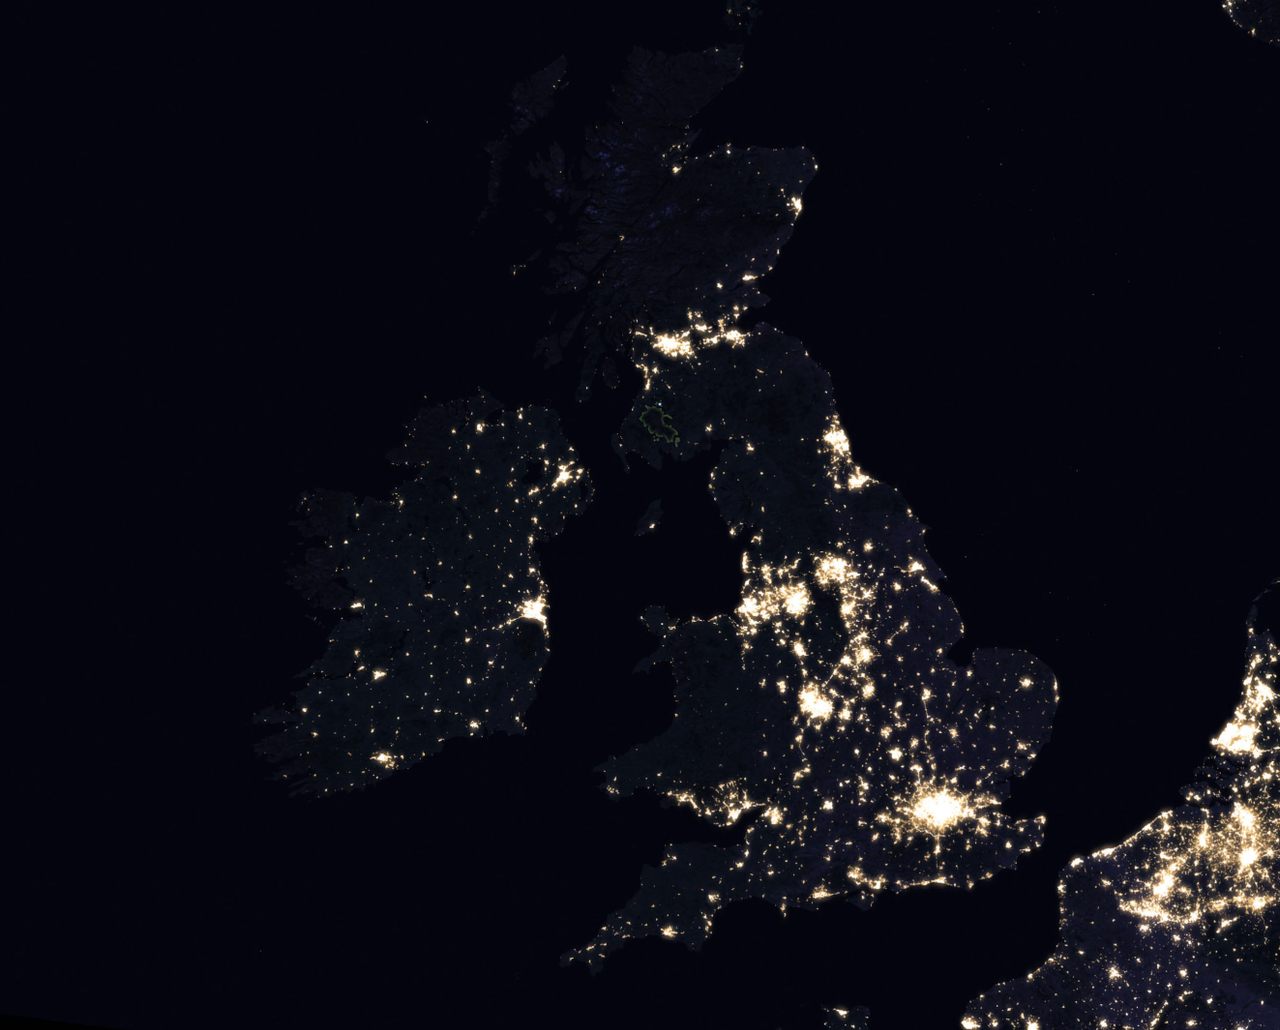 A NASA Earth Observatory image of the British Isles at night.